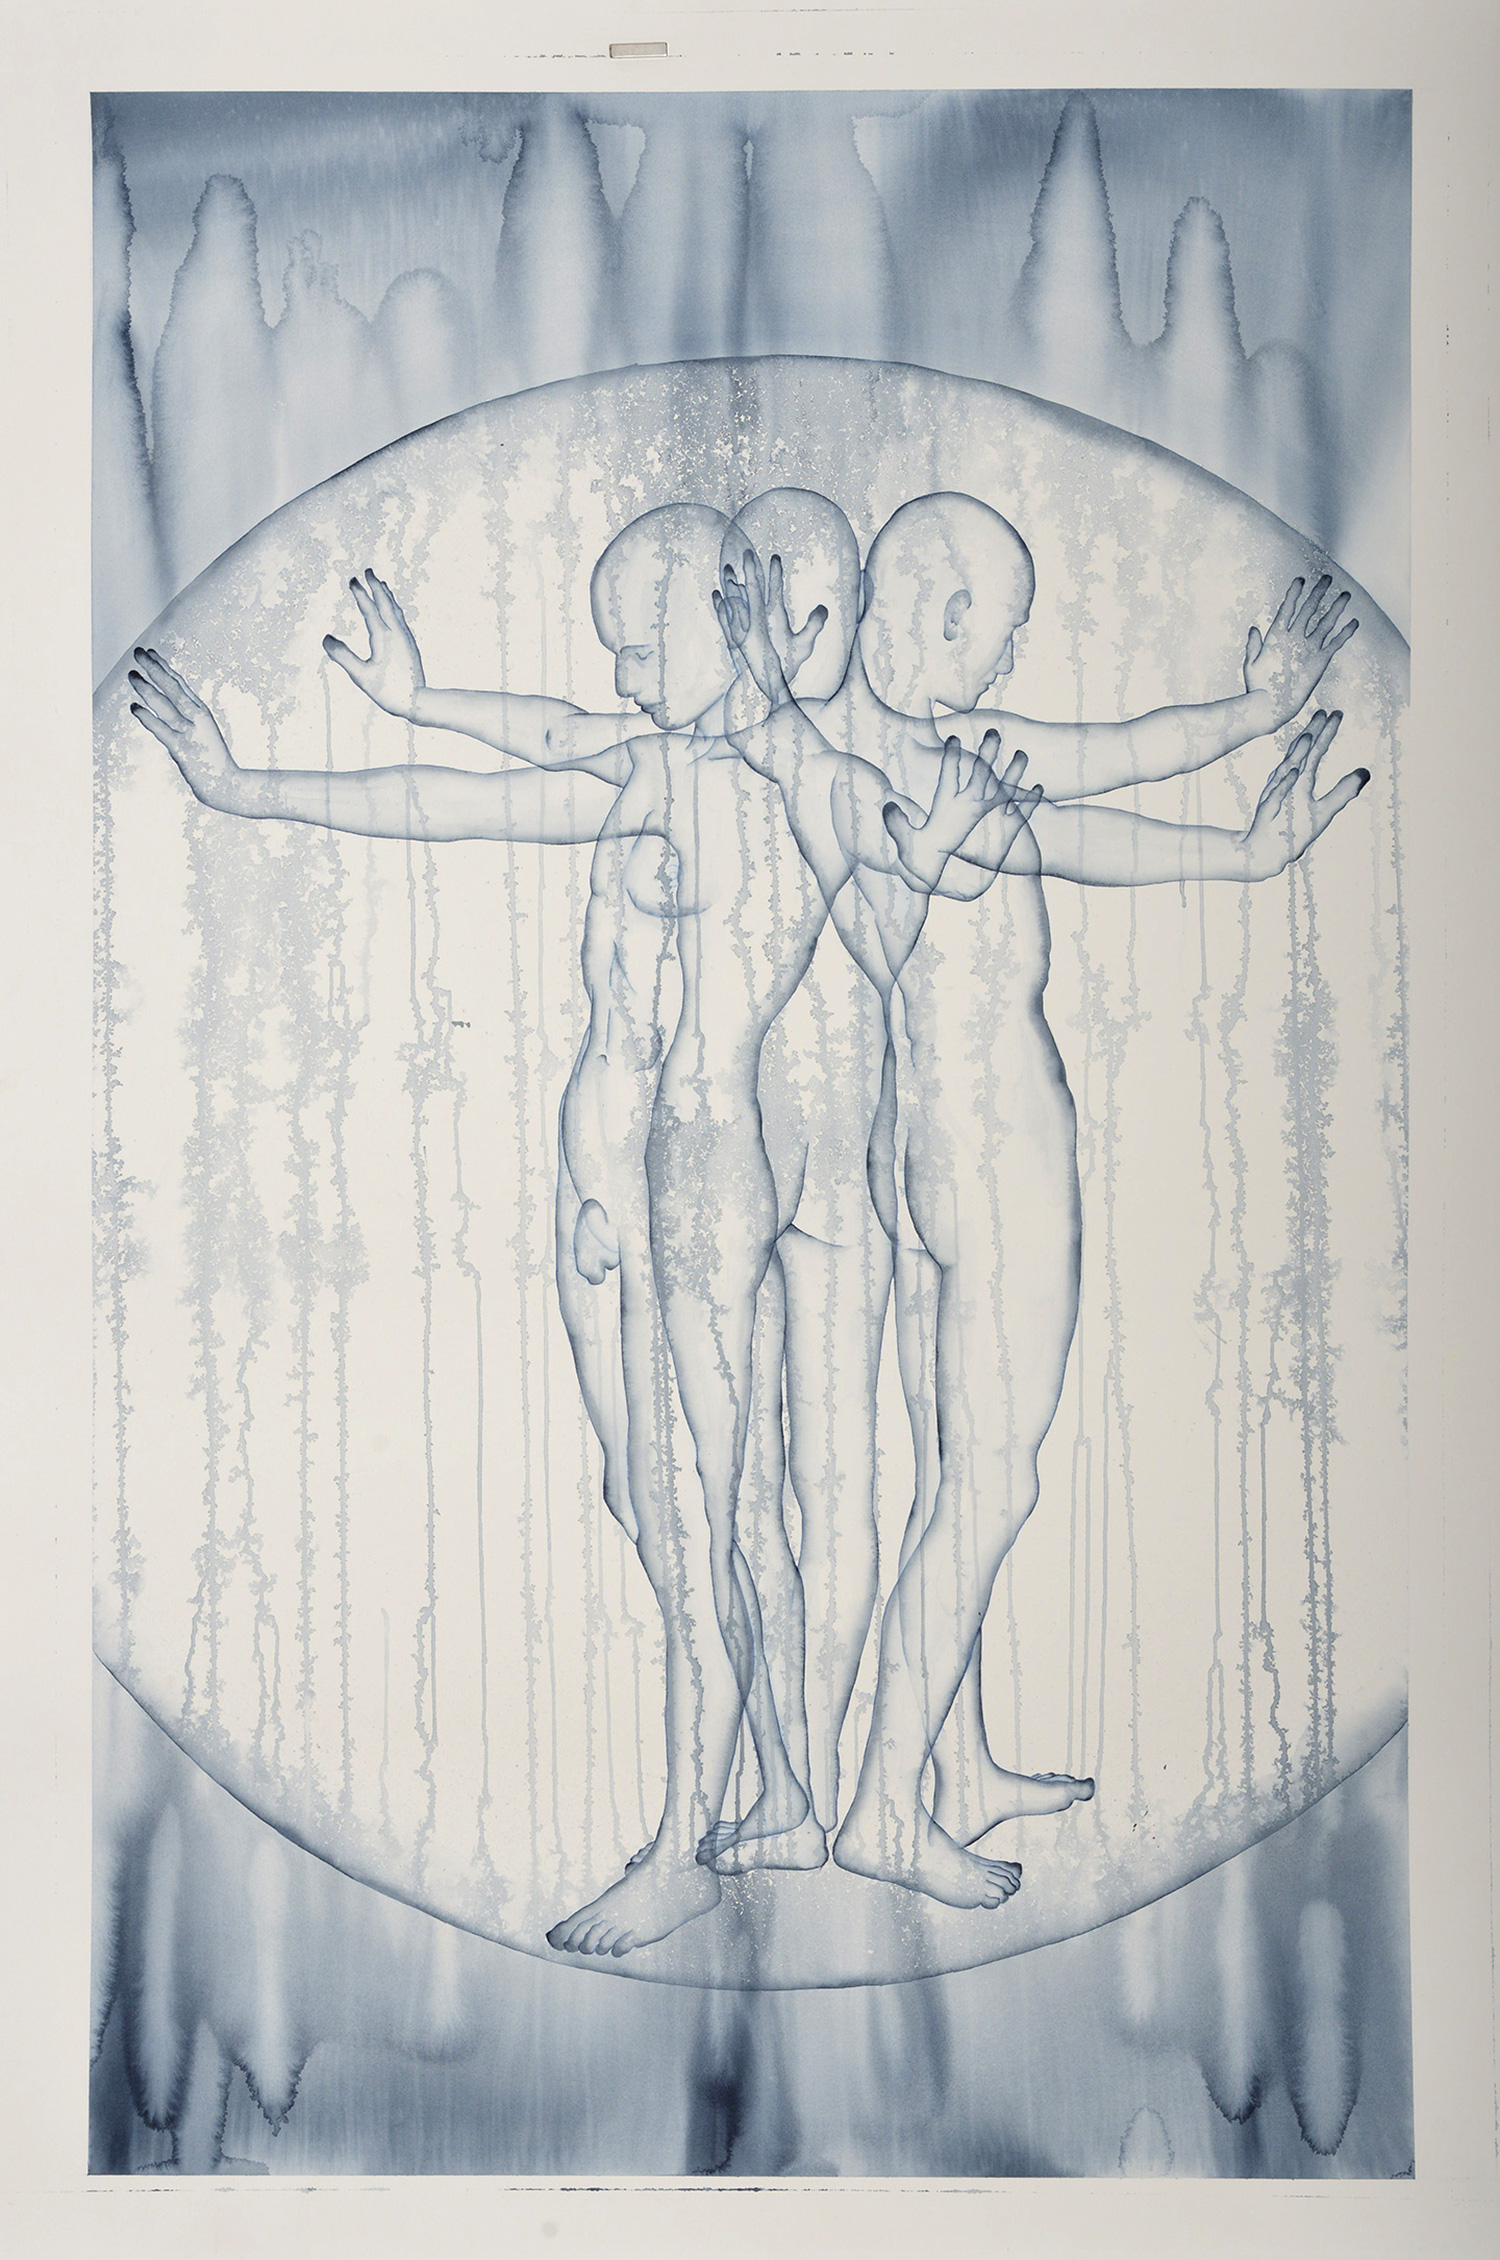 Stefano Bolzano, Aurea emotiva, watercolor on paper, 86x135 cm, 2020.